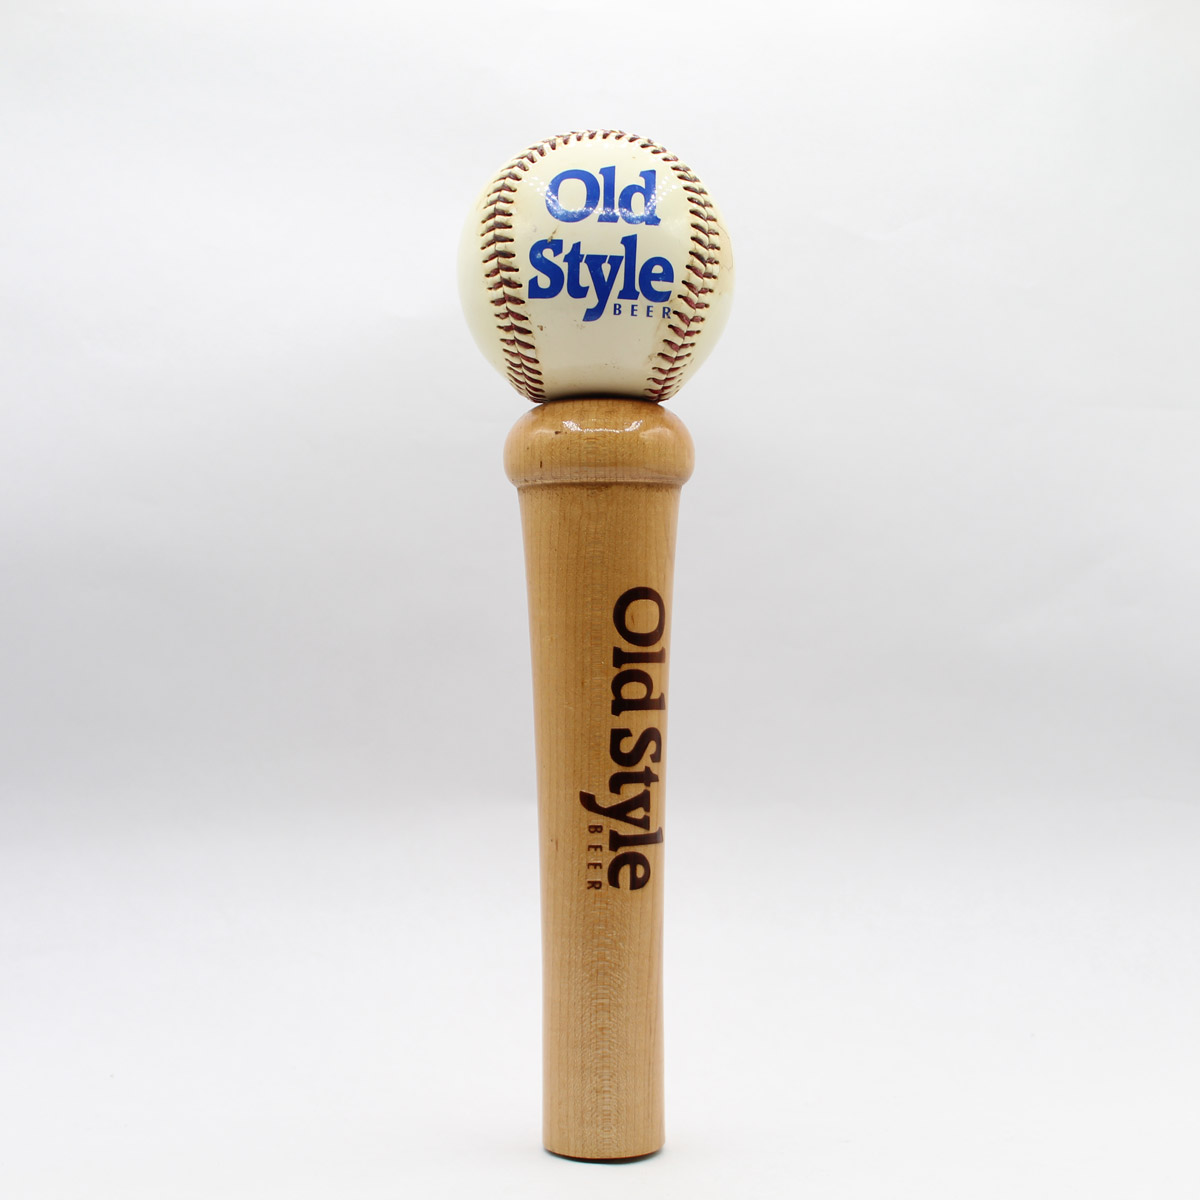 Old style Light Baseball Beer Tap 